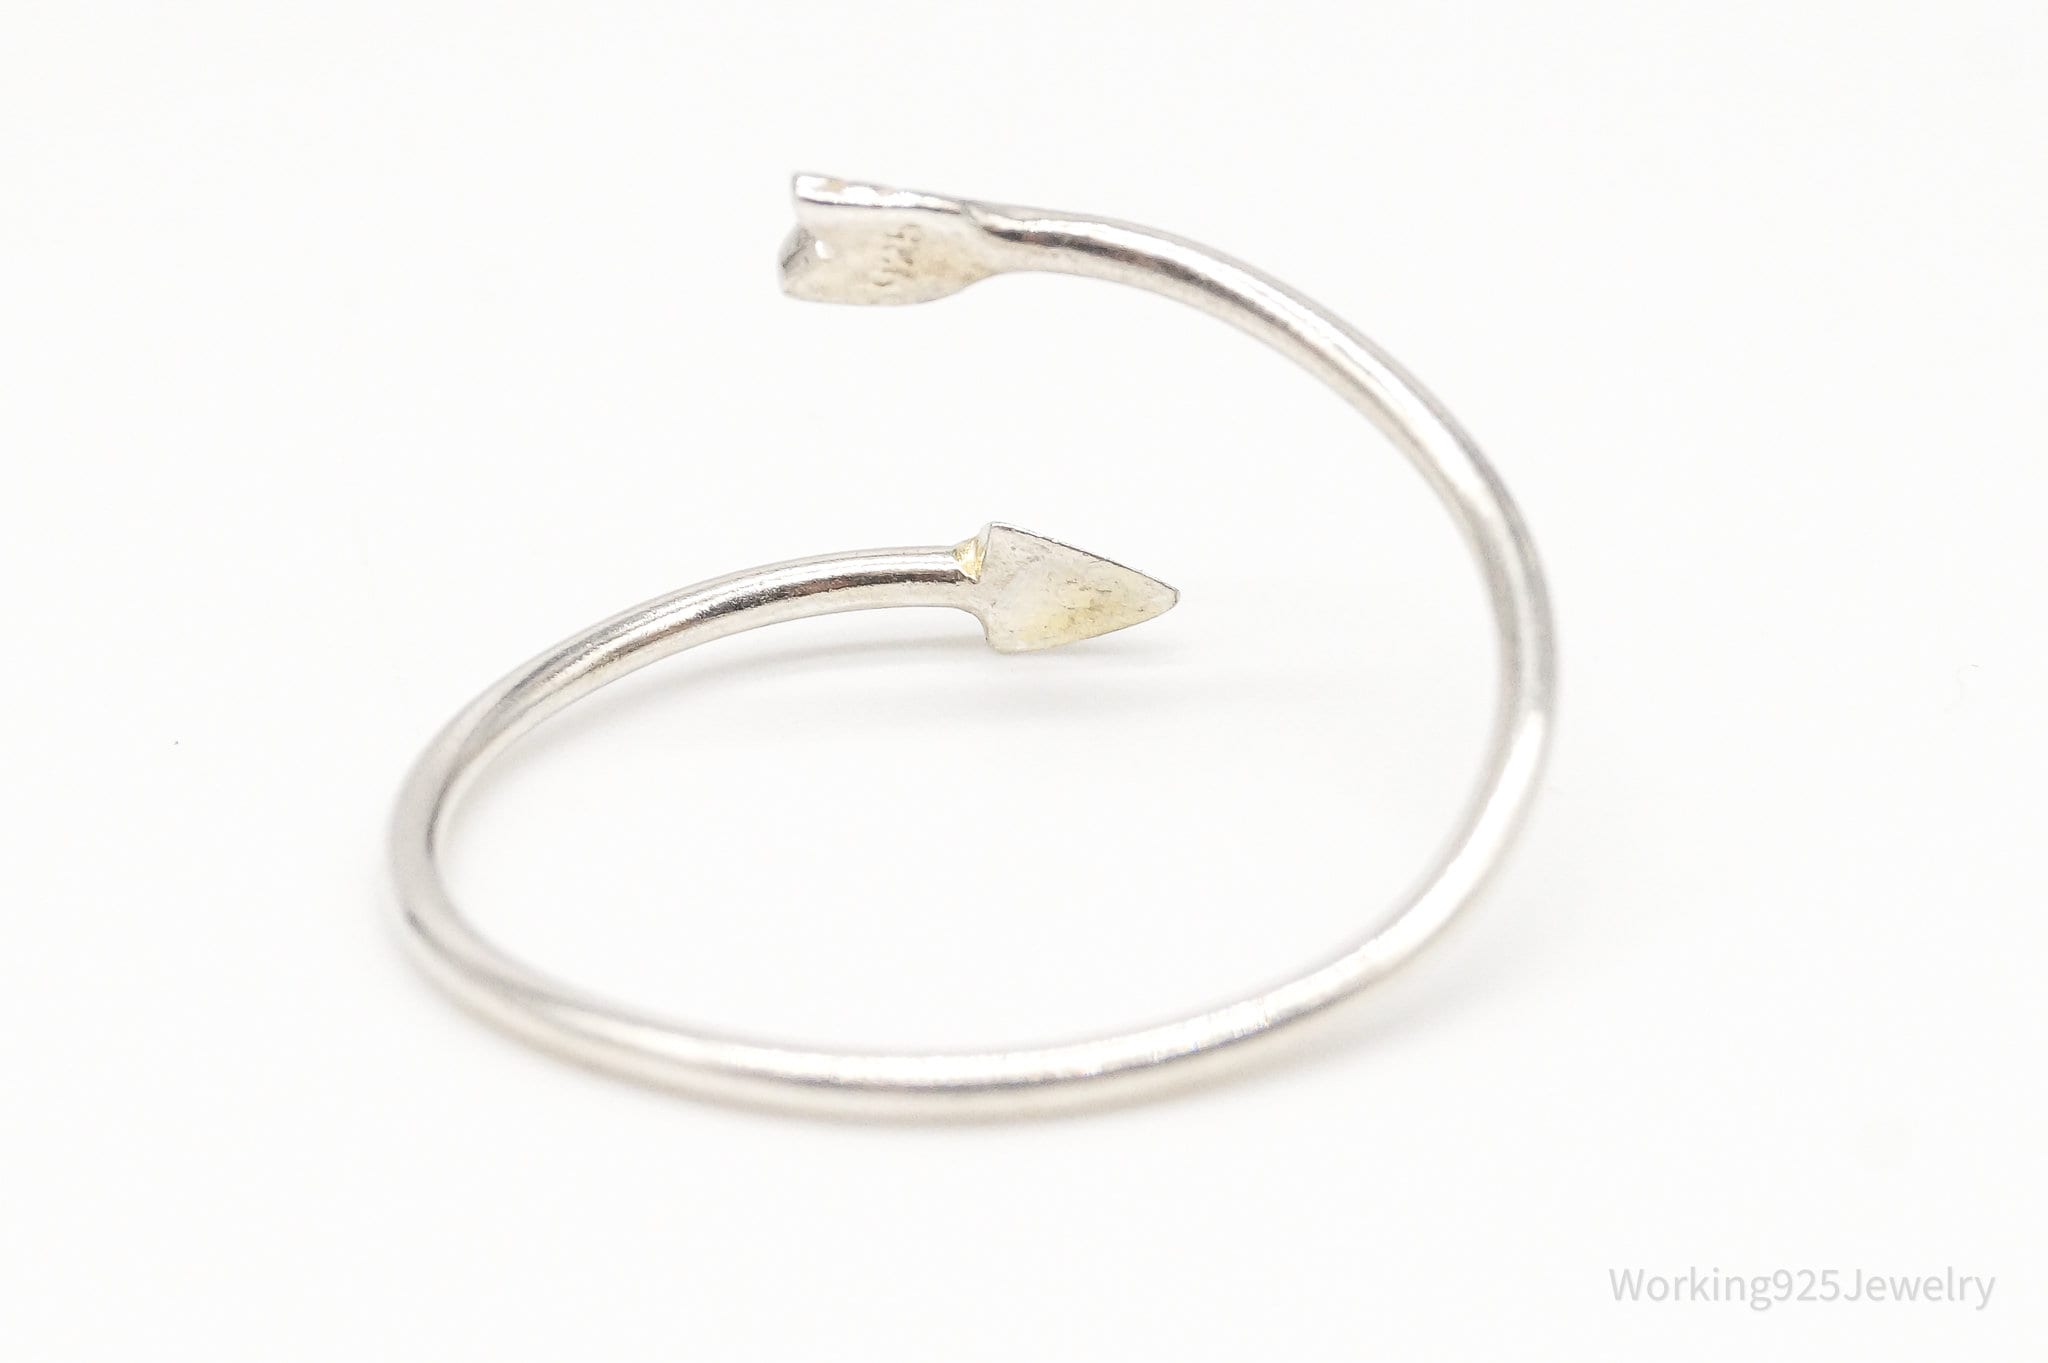 Vintage Arrow Gold Vermeil Sterling Silver Wrap Ring - Size 8.75 Adjustable